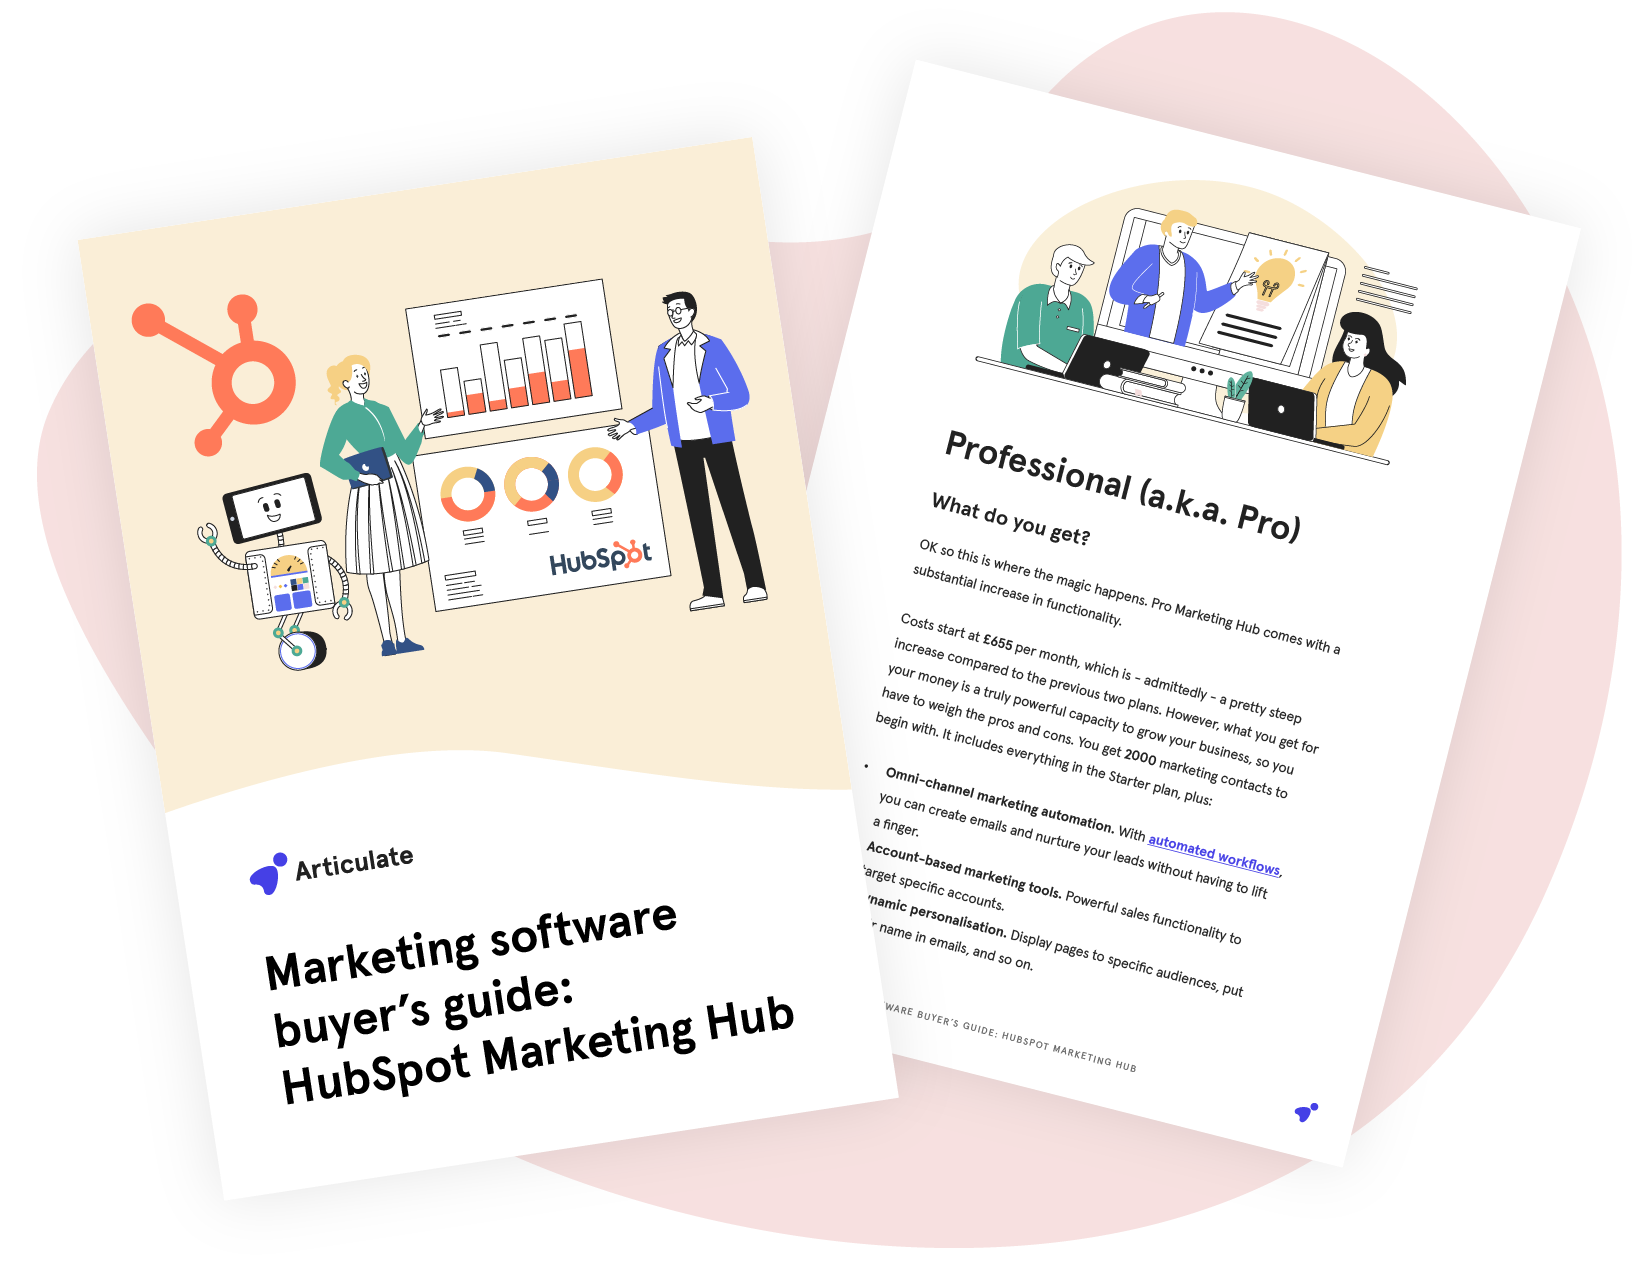 Marketing software buyer's guide: HubSpot Marketing Hub